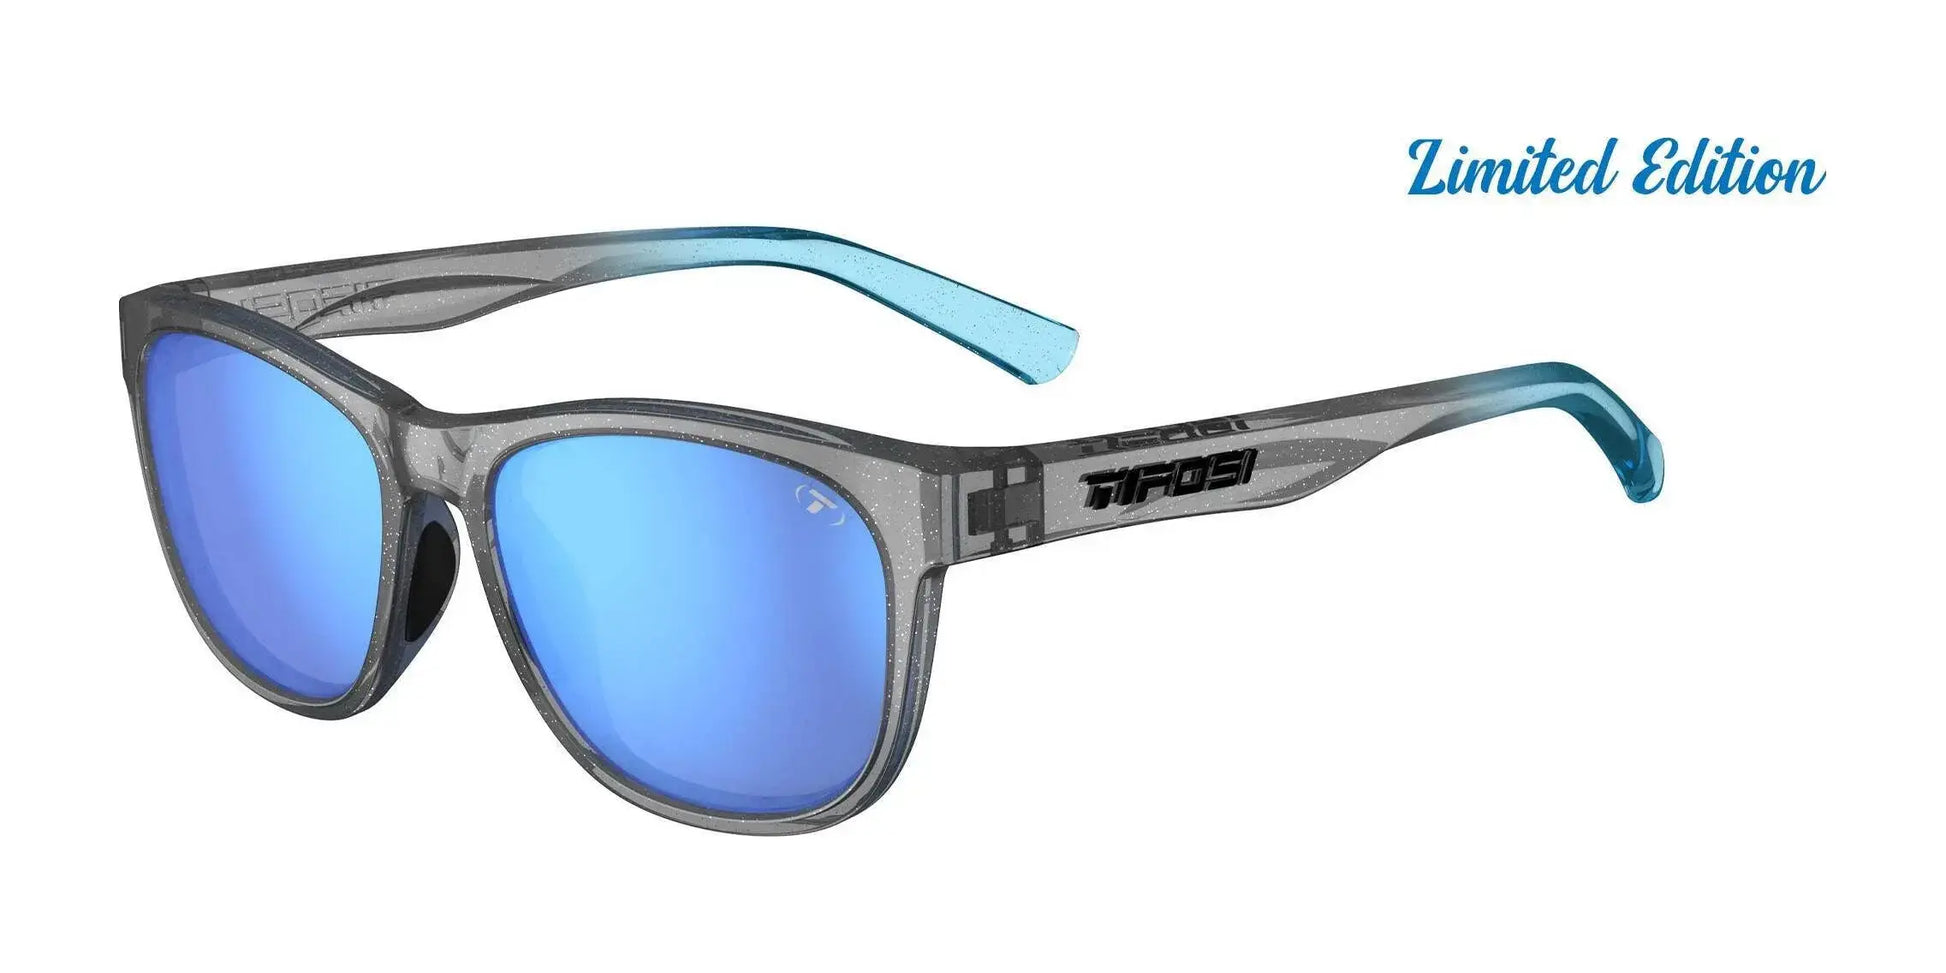 Tifosi Optics SWANK Sunglasses Silver Mist / Smoke Tint with Bright Blue Mirror